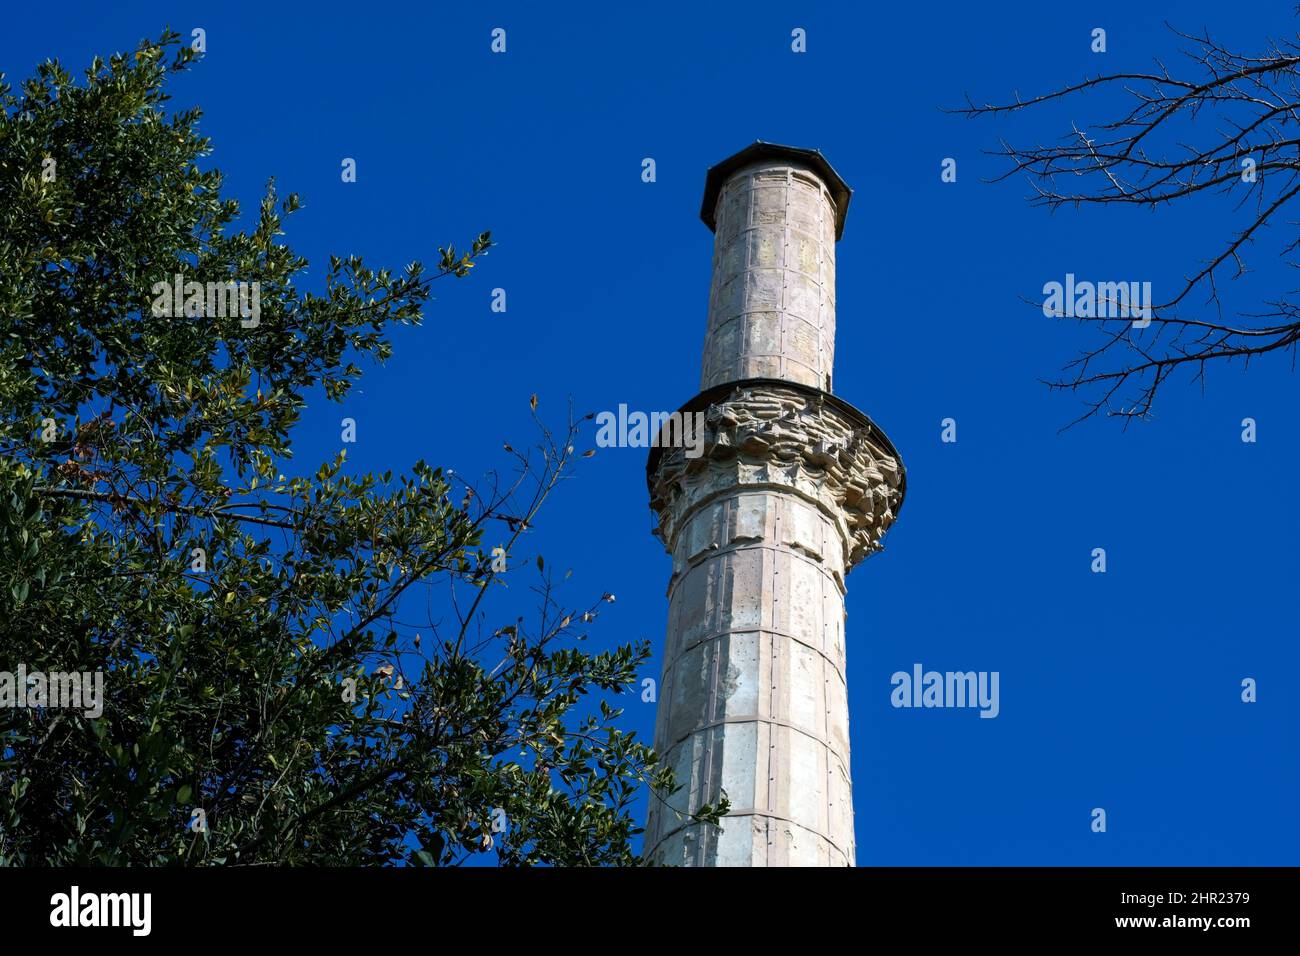 The minaret of the Rotunda monument in Thessaloniki, Greece Stock Photo